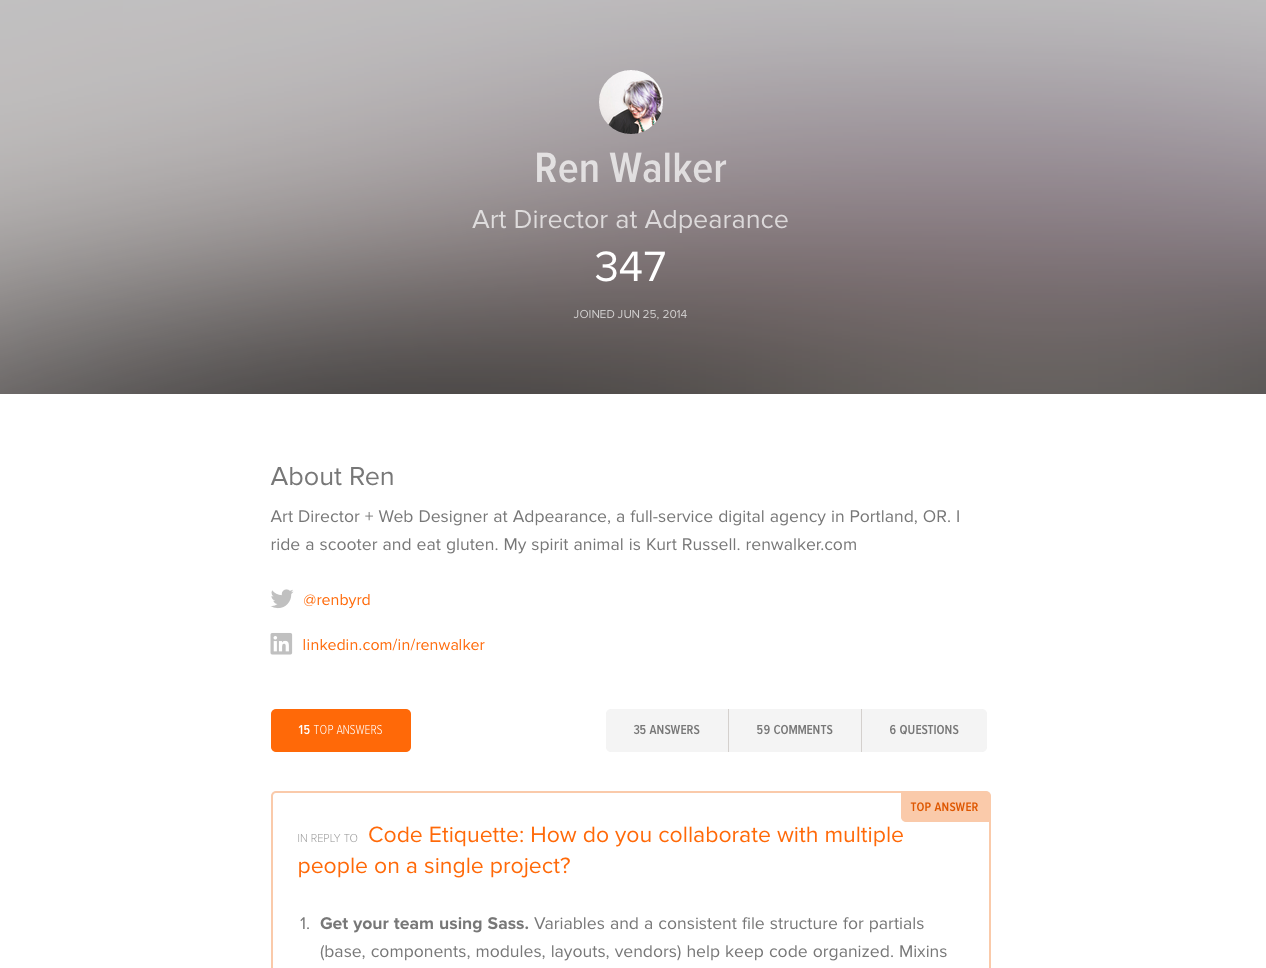 ren walker's profile